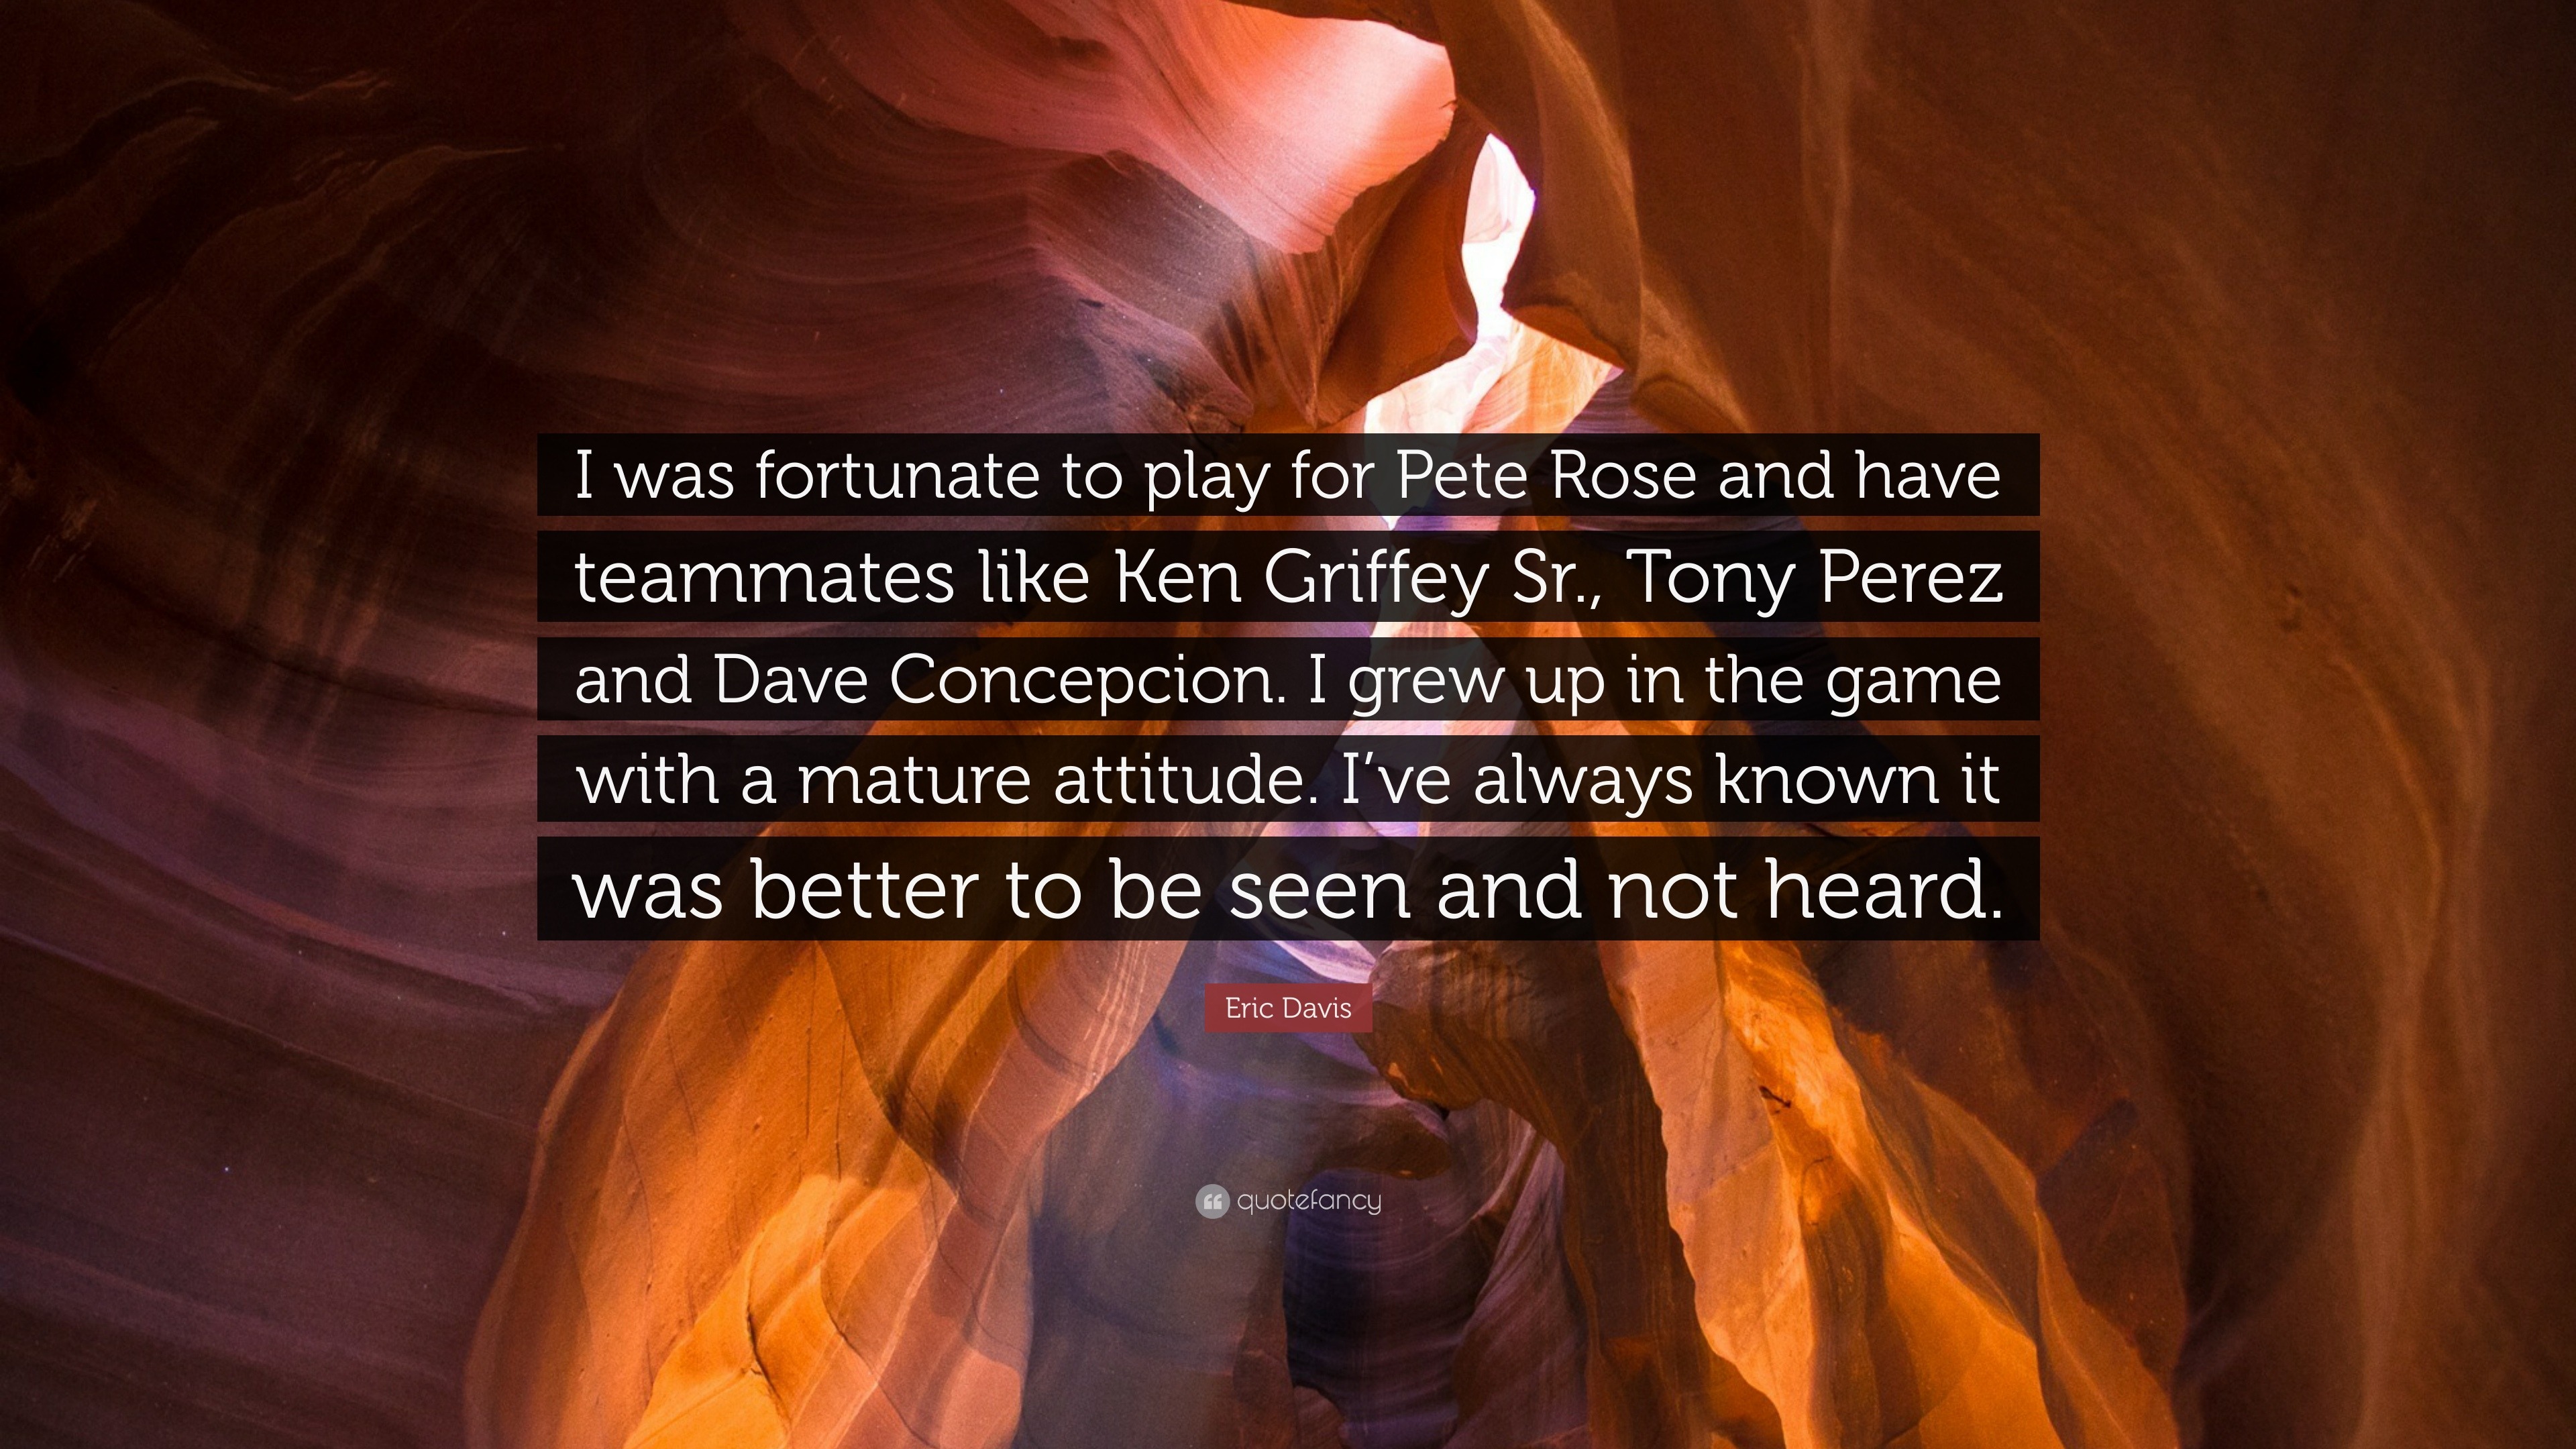 Top 7 Fr Dave Concepcion Quotes: Famous Quotes & Sayings About Fr Dave  Concepcion